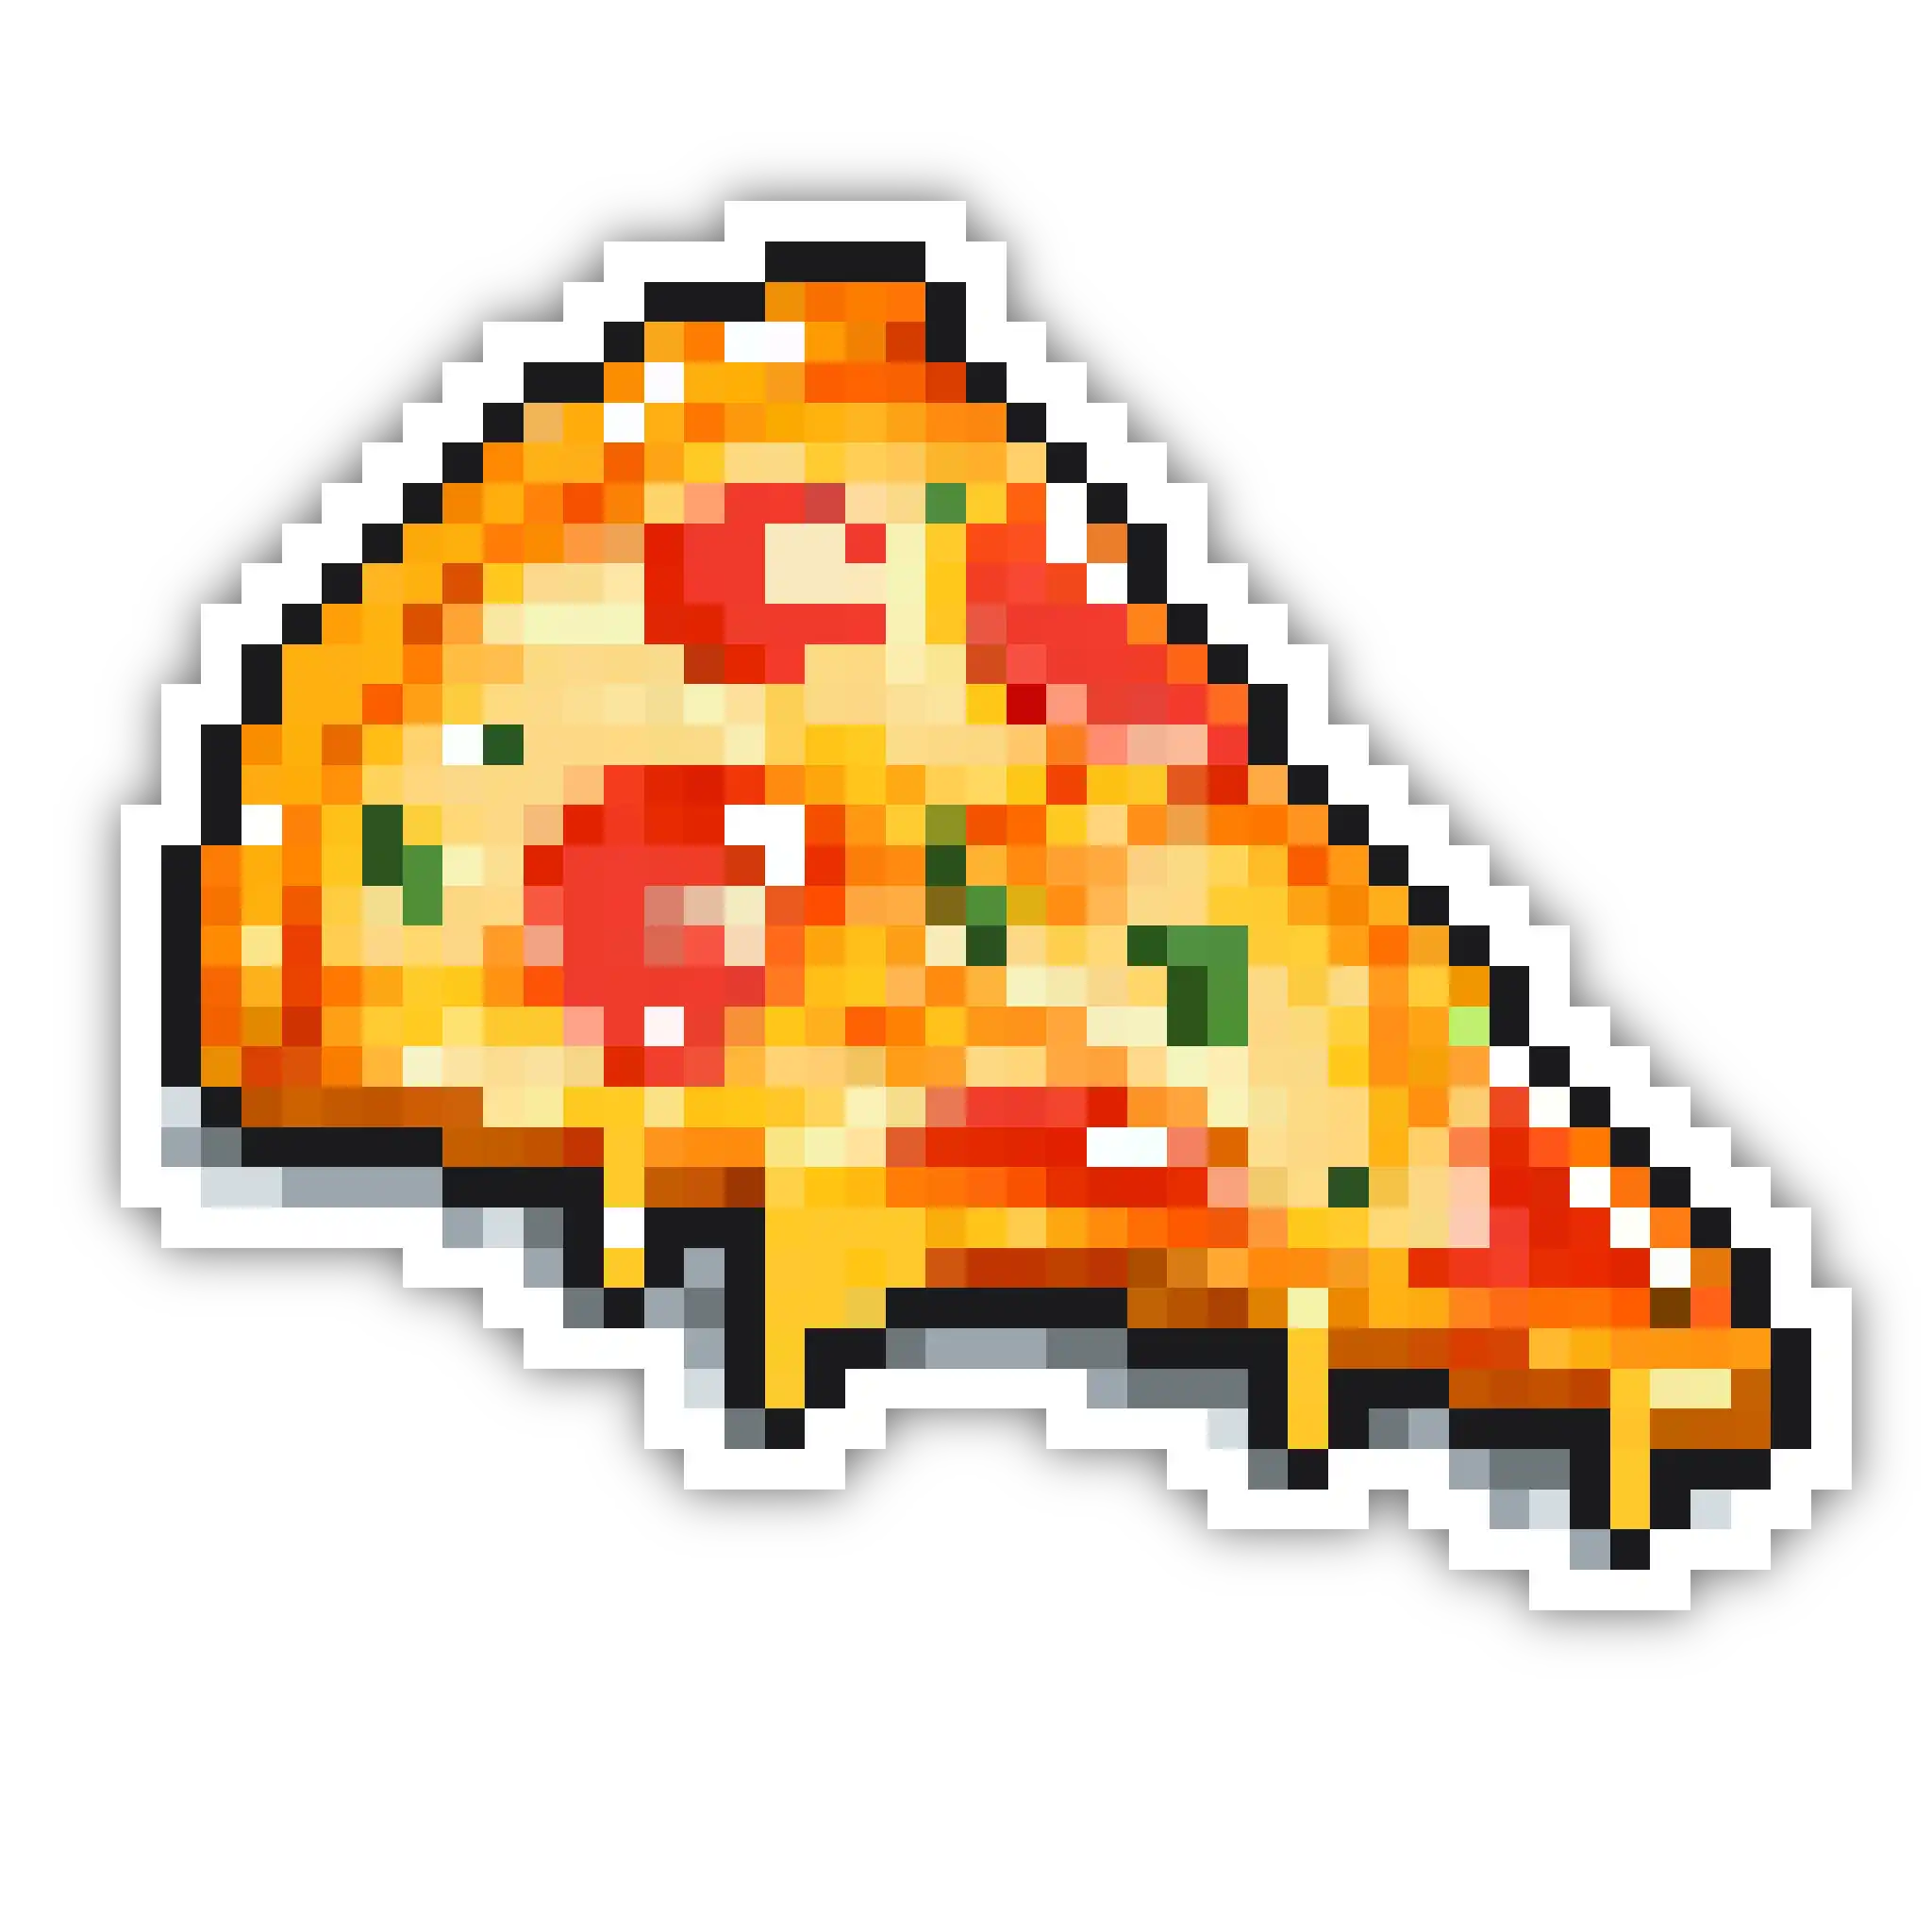 Team Member: Pizza